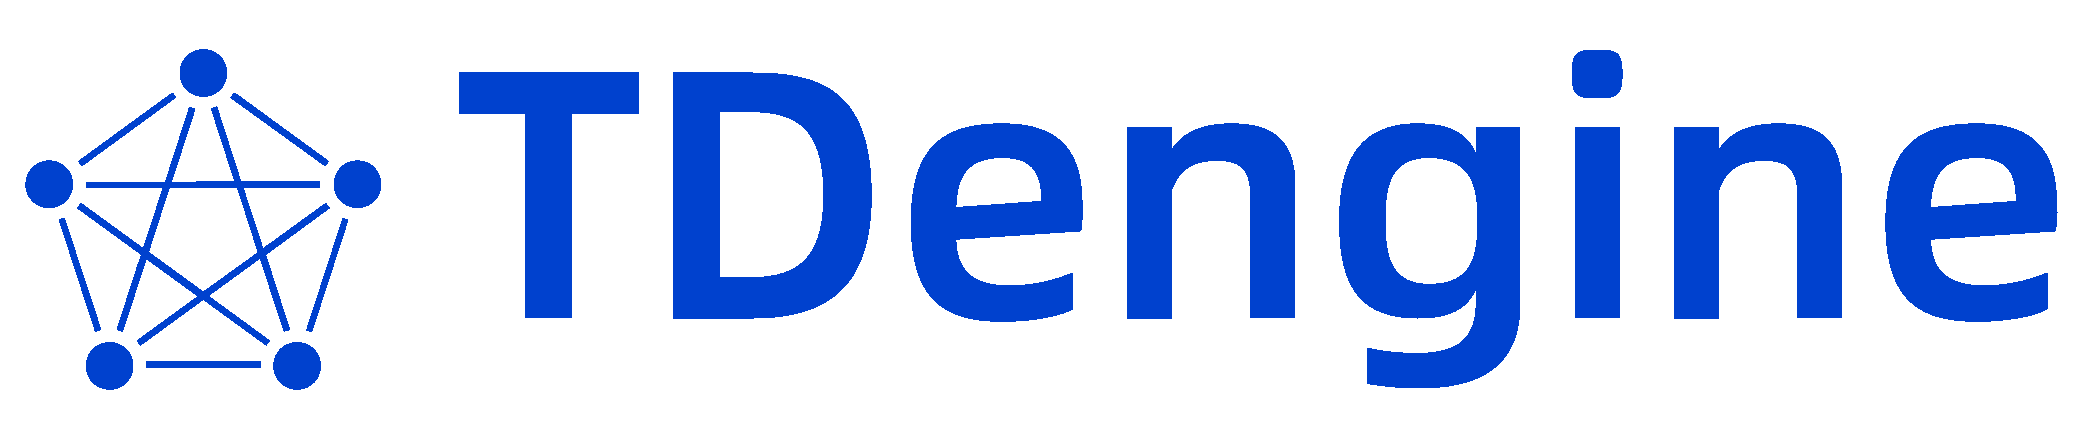 docs/assets/TDengine-logo-trans.png